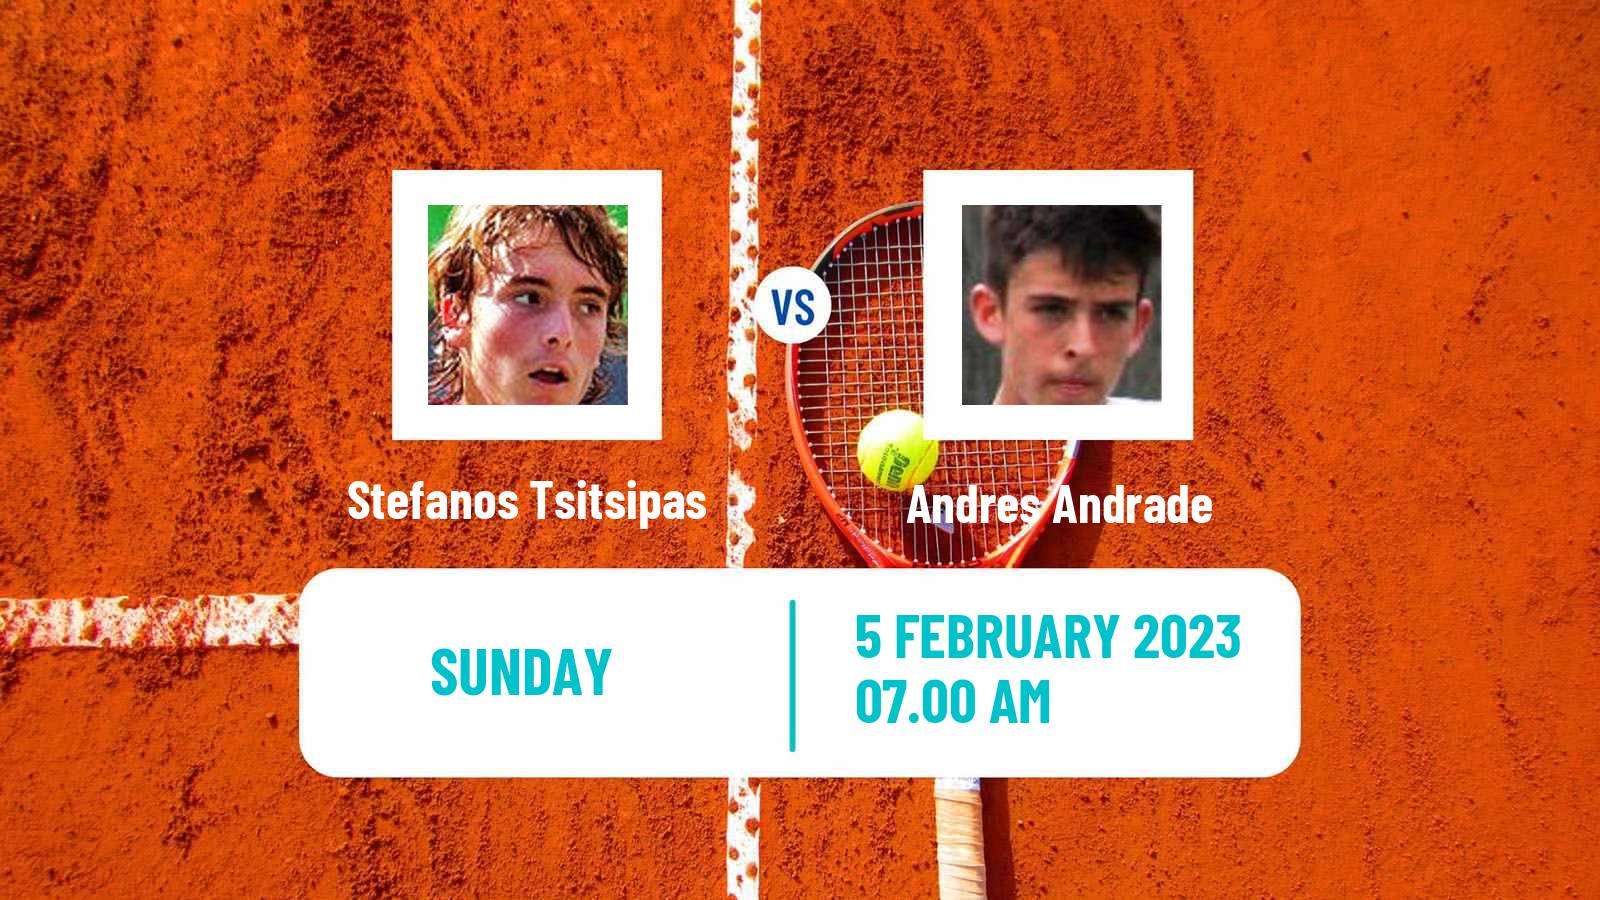 Tennis Davis Cup World Group I Stefanos Tsitsipas - Andres Andrade